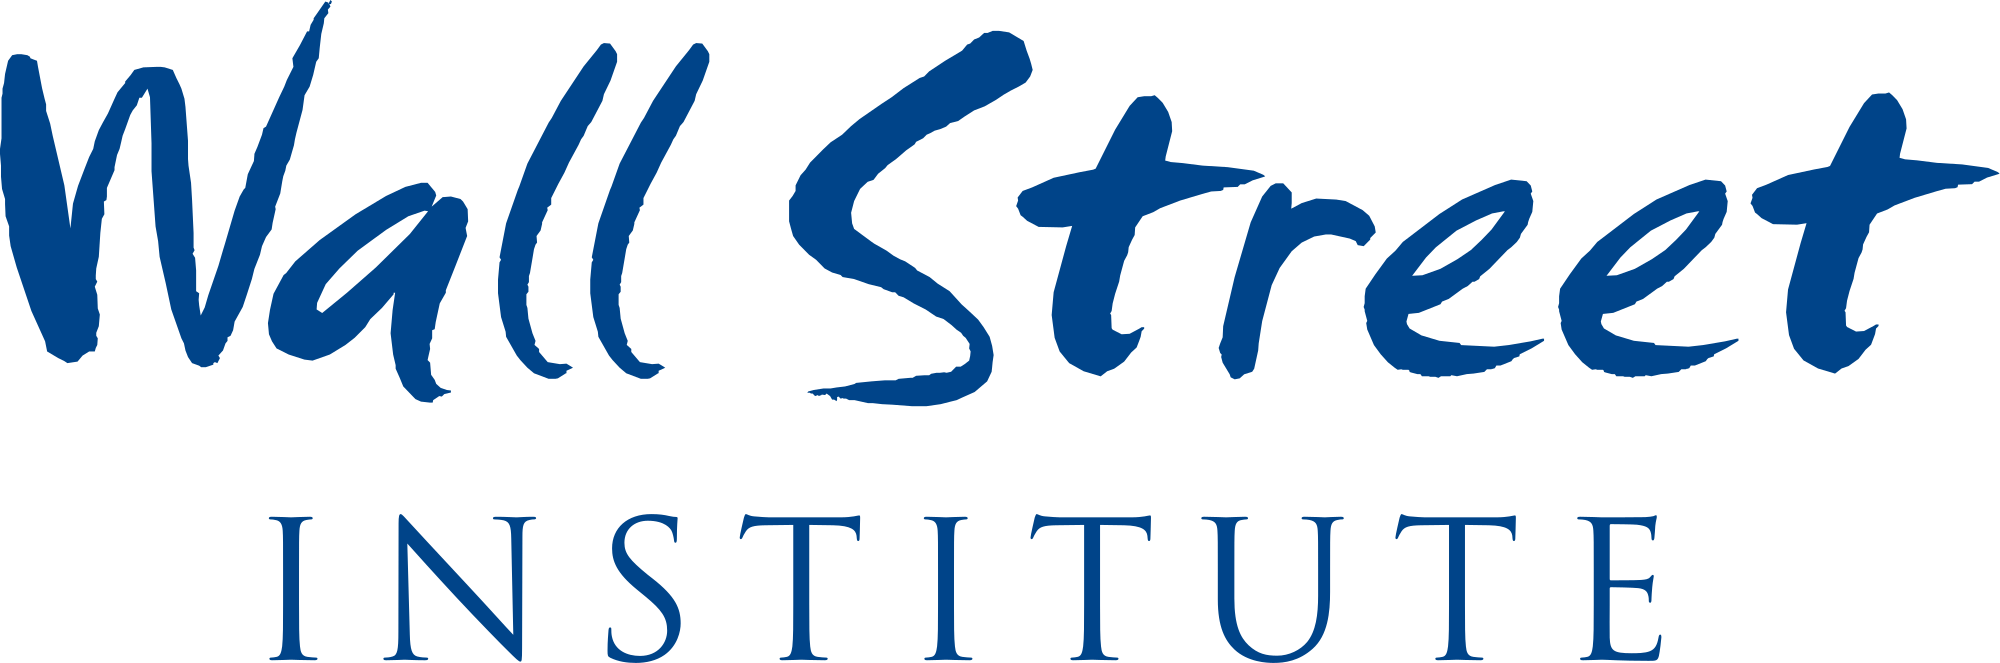 Wall Street Logo - File:Wall Street Institute logo.svg - Wikimedia Commons